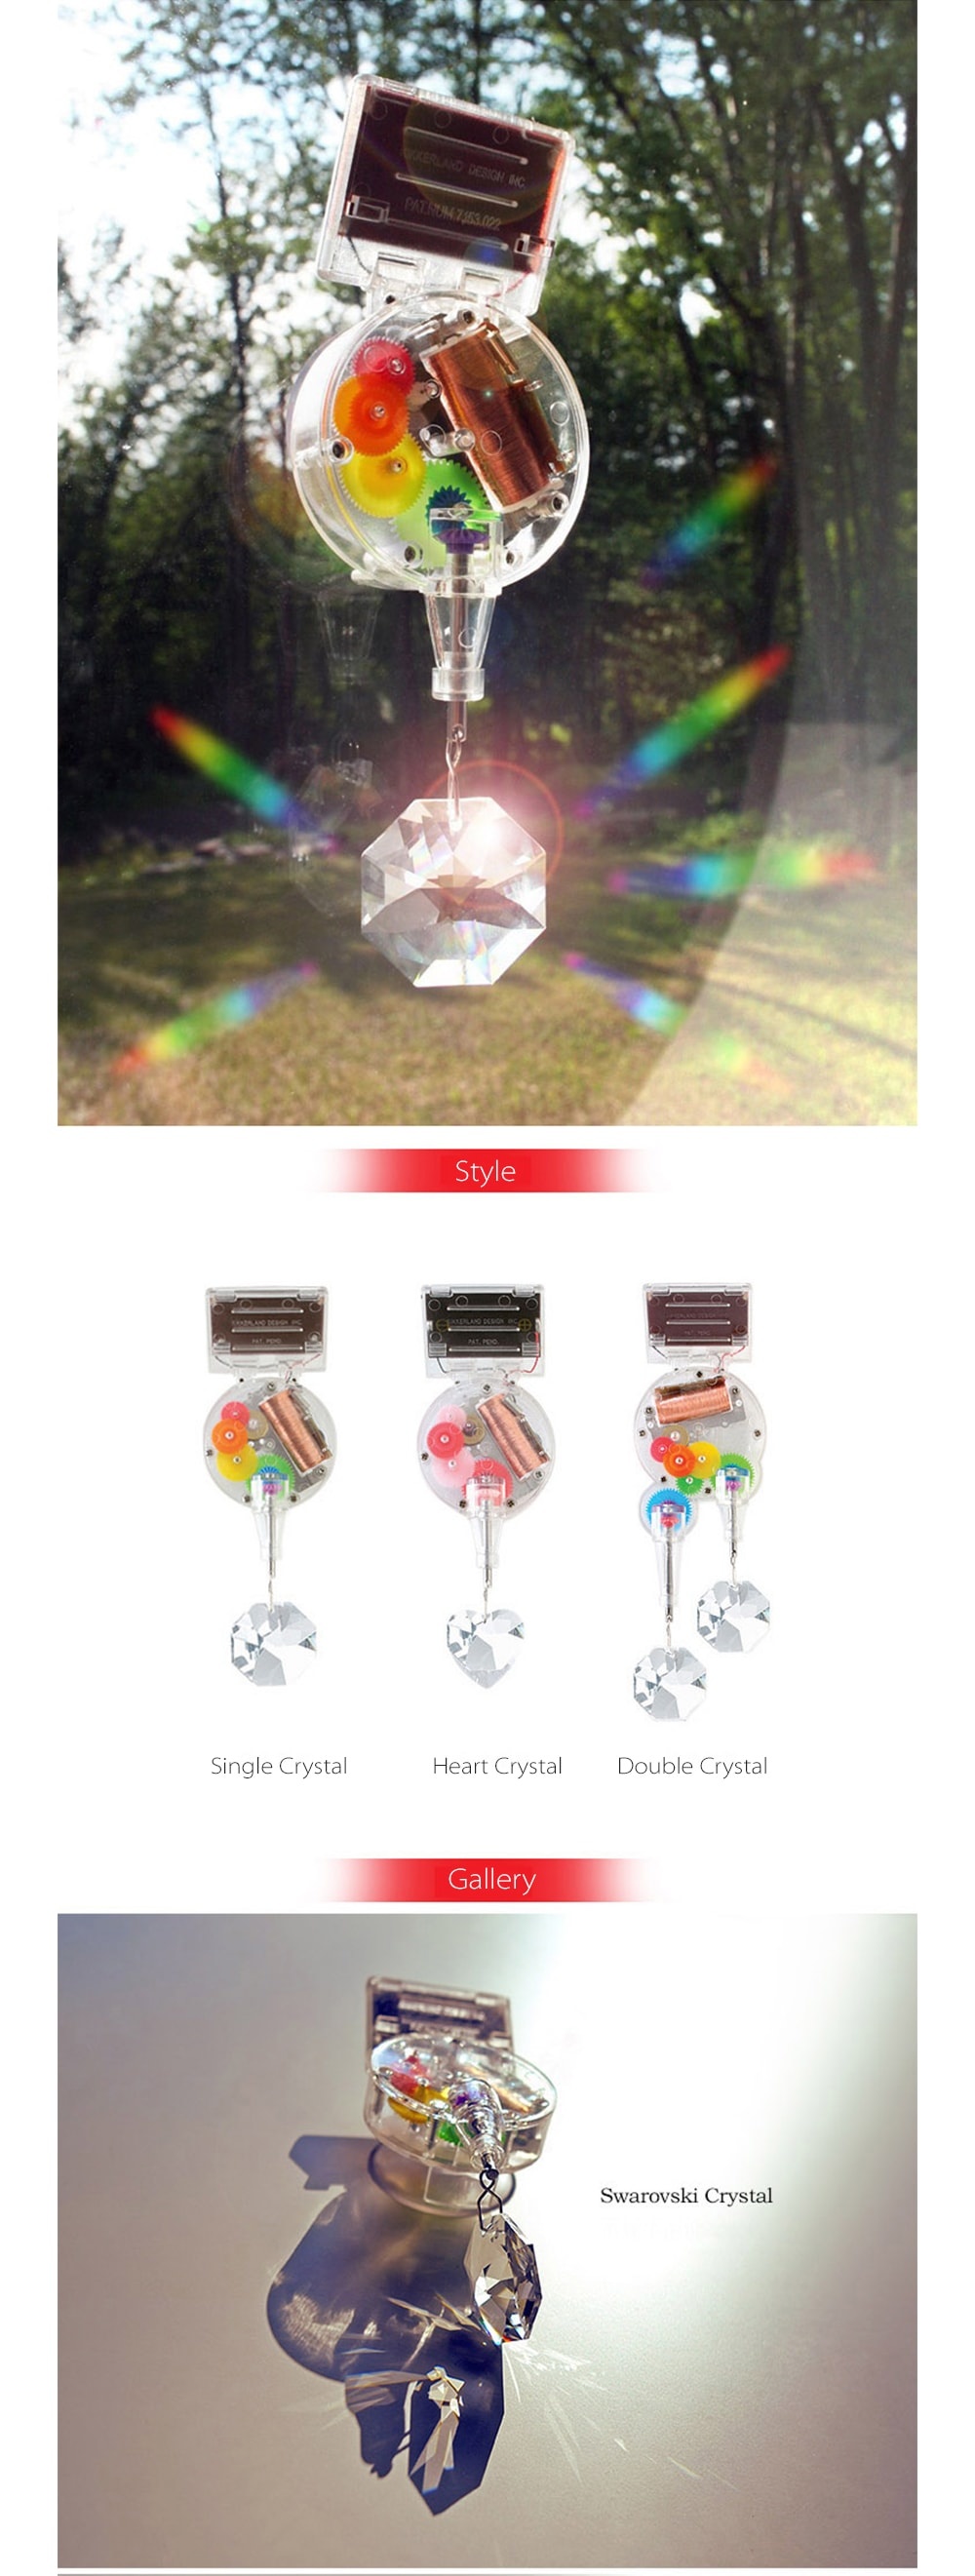 NEW Kikkerland Solar-Powered Rainbow Maker with Swarovski Crystal